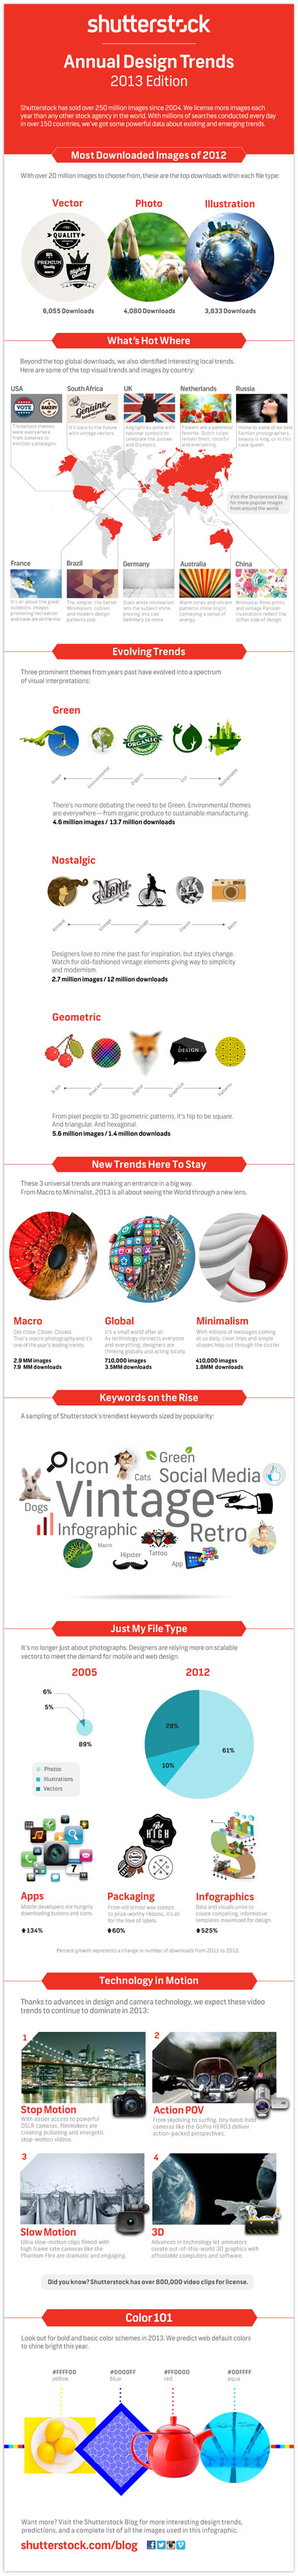 2. Shutterstock Annual Design Trends 2013 Edition